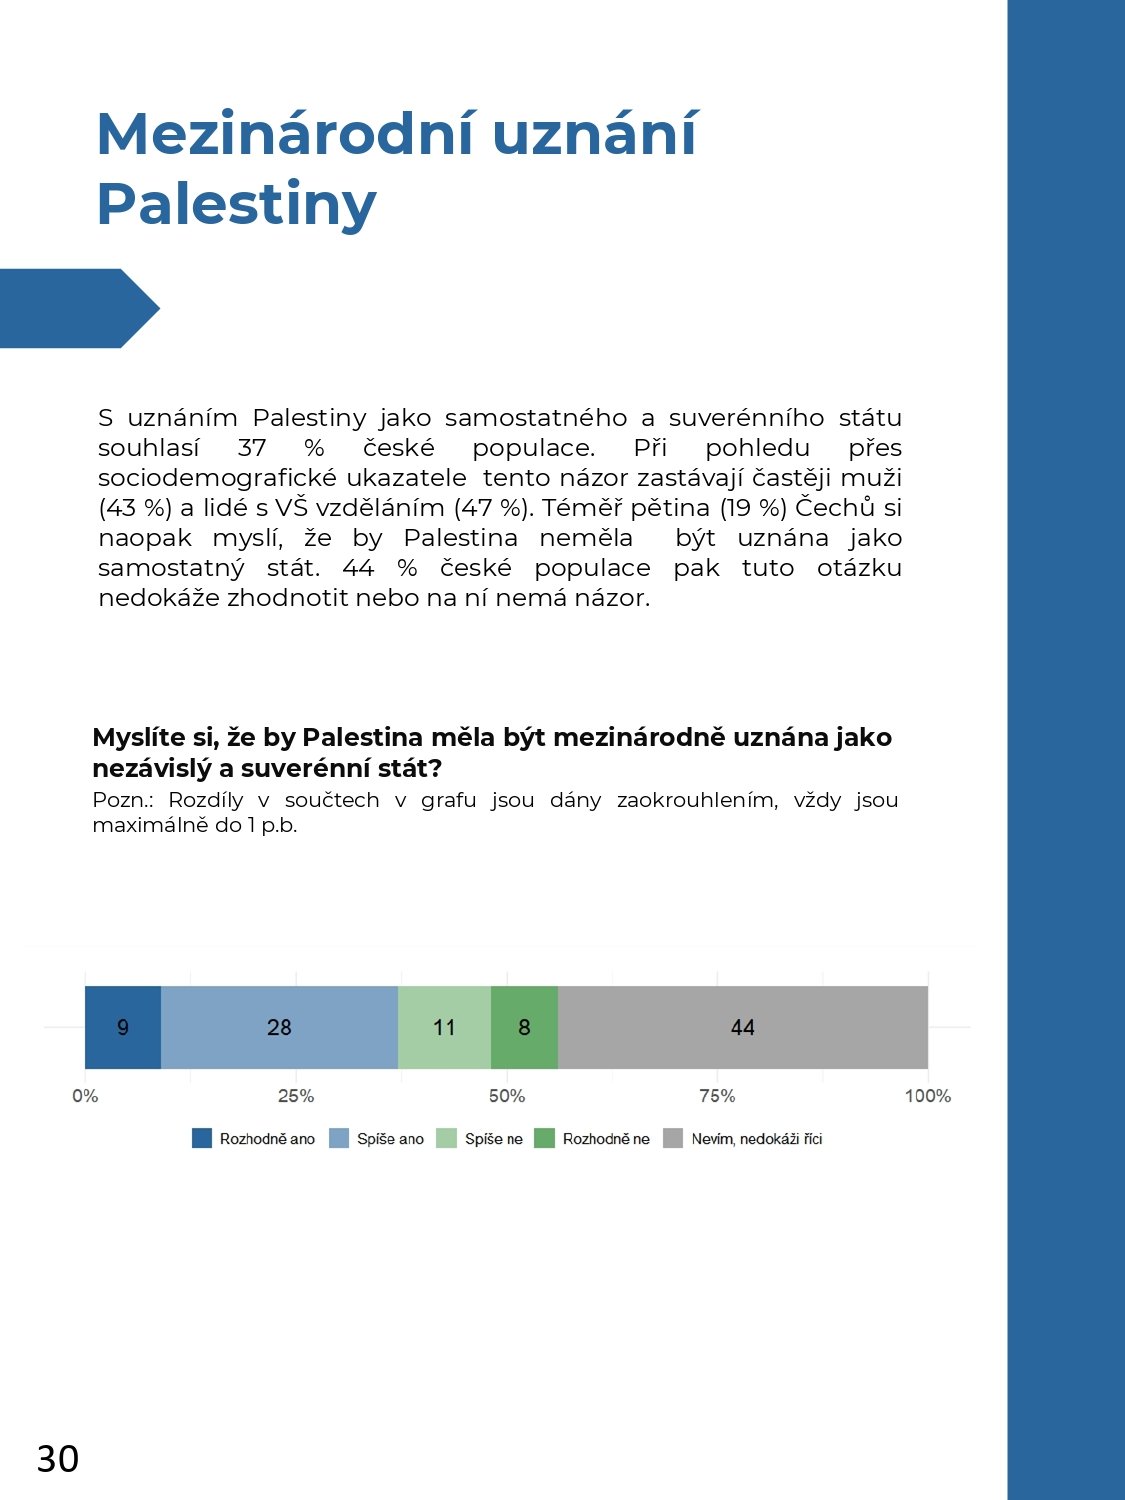 HCIS_PRCP_Public attitudes towards Israel_REPORT_CZ_Finální (2)_pages-to-jpg-0030.jpg